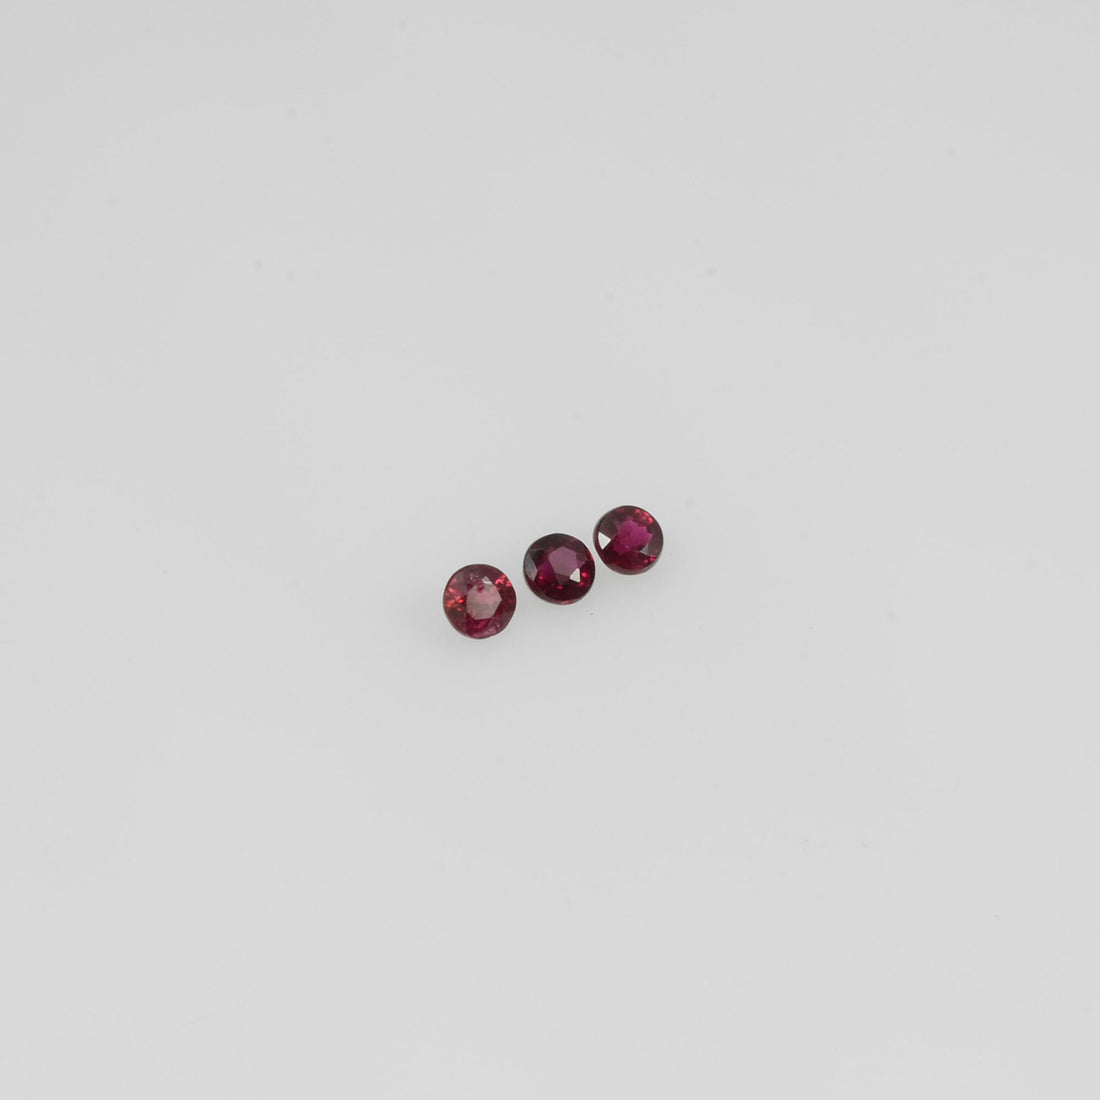 1.4-2.4 mm Natural Ruby Loose Gemstone Round Cut